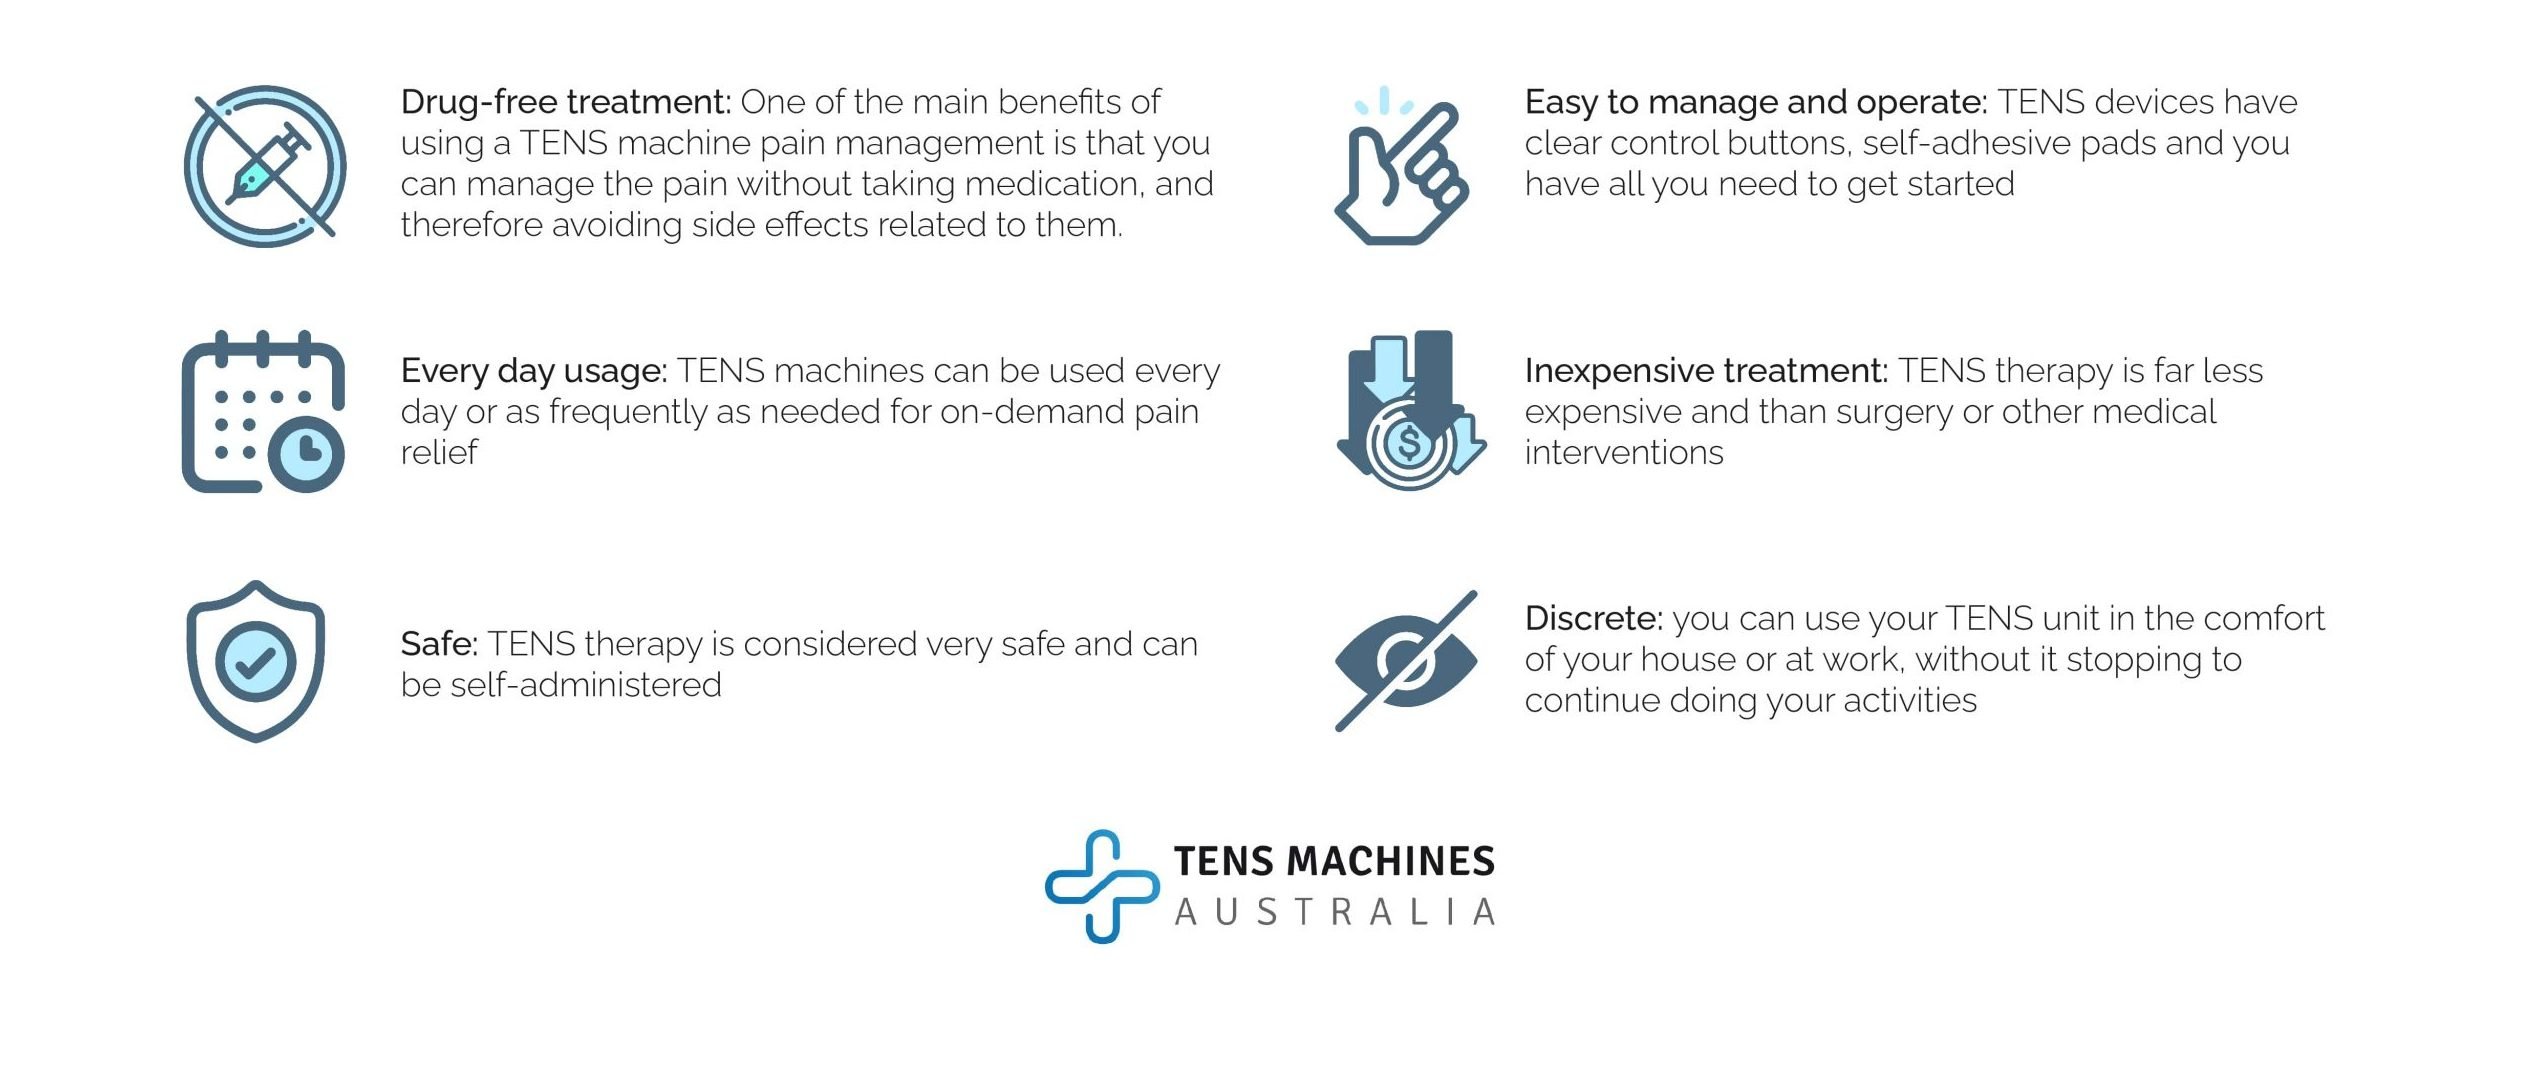 https://blog.tensmachinesaustralia.com.au/wp-content/uploads/2022/08/Tens-Machines-Australia-period-pain_benefits-of-using-tens-min-scaled-e1661388859938.jpg